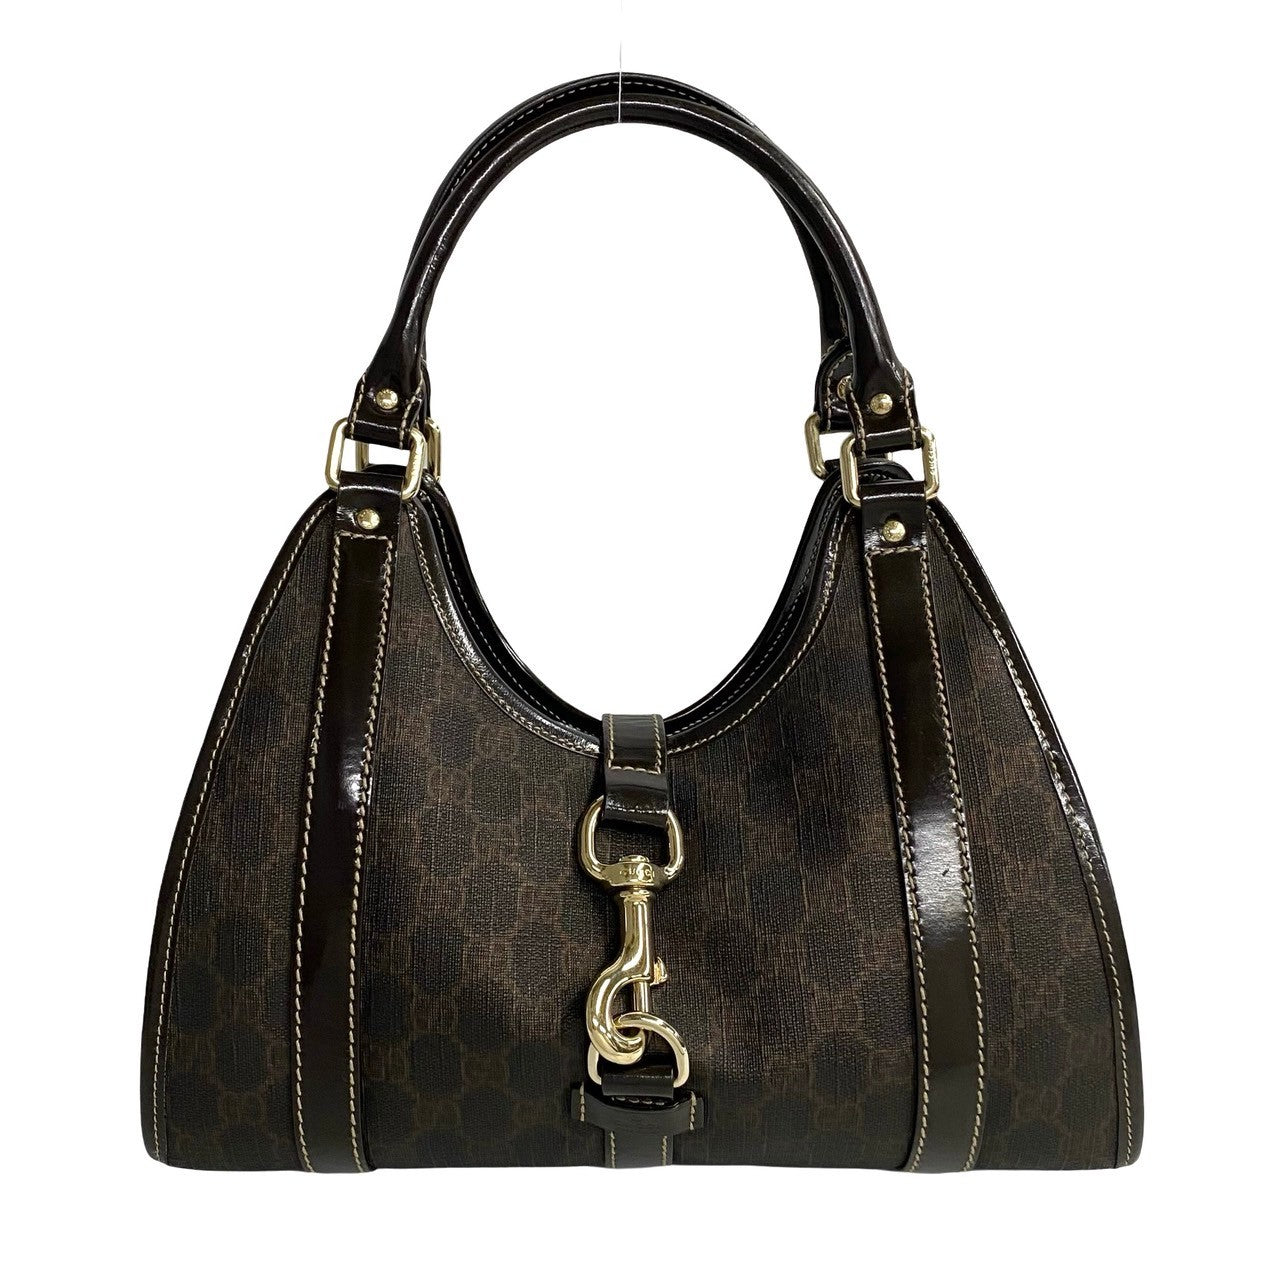 Gucci Gucci Gg Supreme Logo Leather Genuine Handbag Tote Bag Leather Tote Bag 203495 in Excellent condition